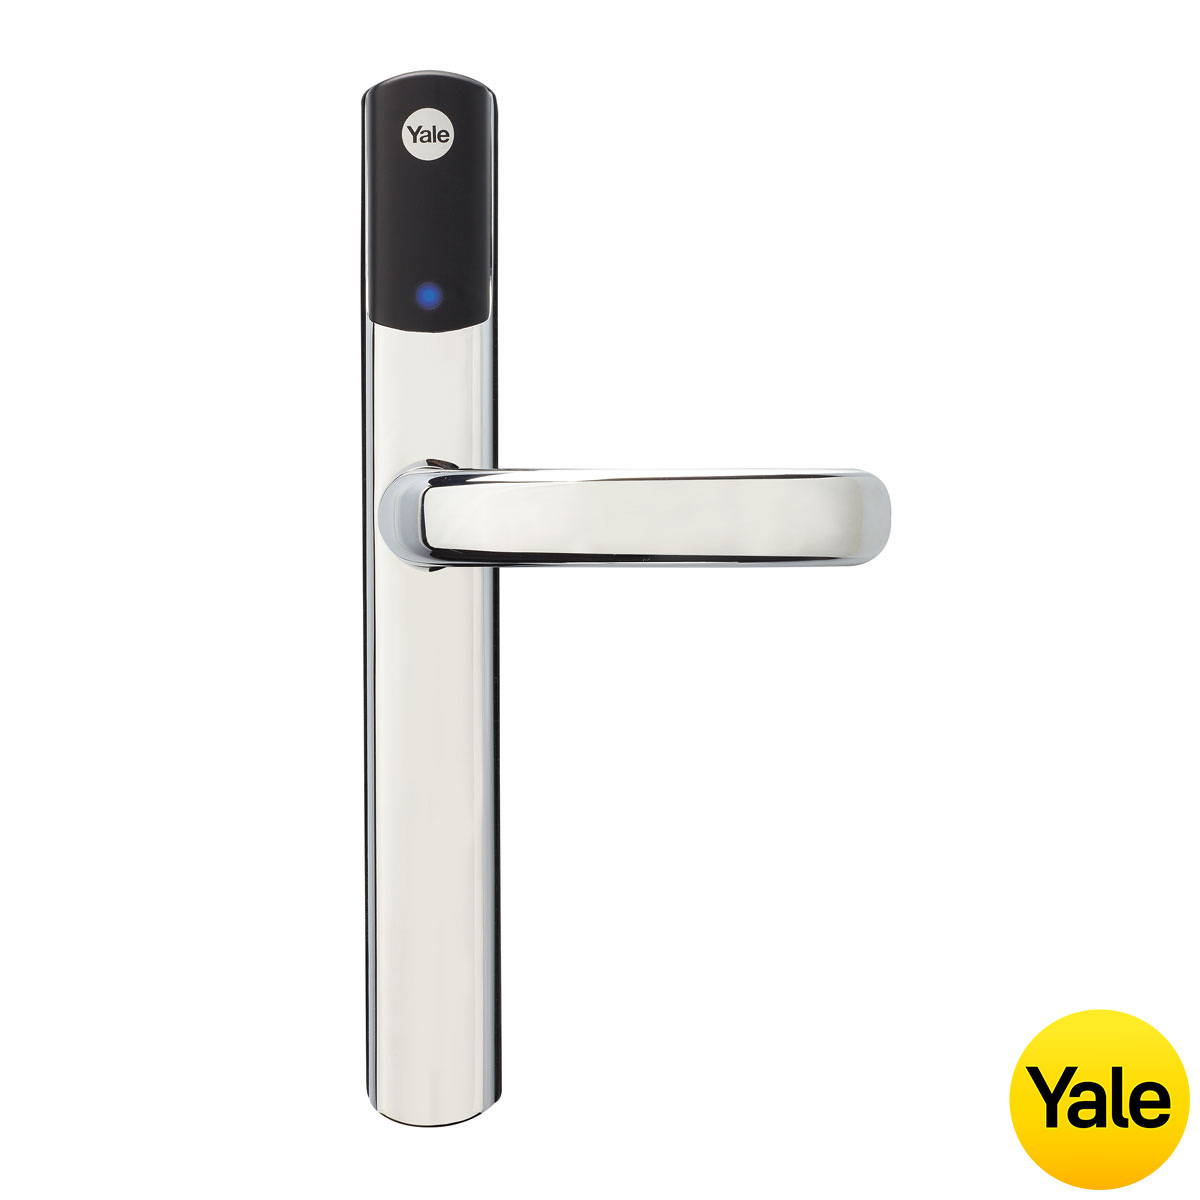 Yale Conexis L1 Smart Lock in Chrome